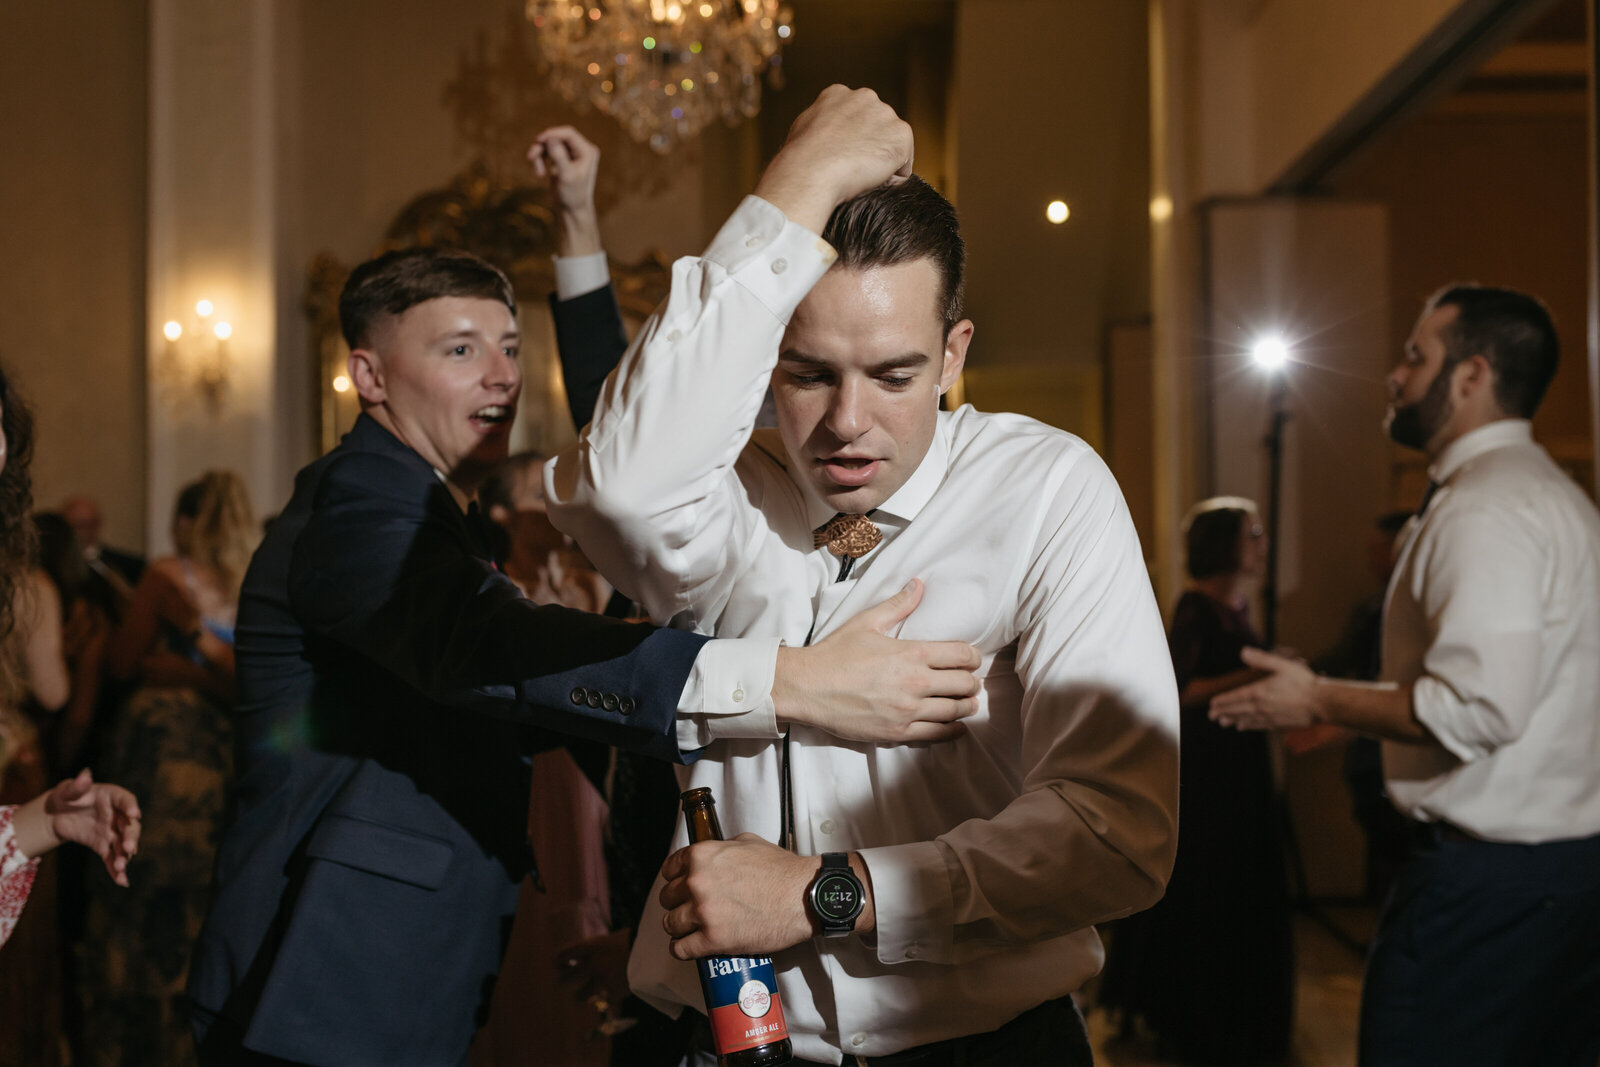 A man dances during a wedding reception in a hotel